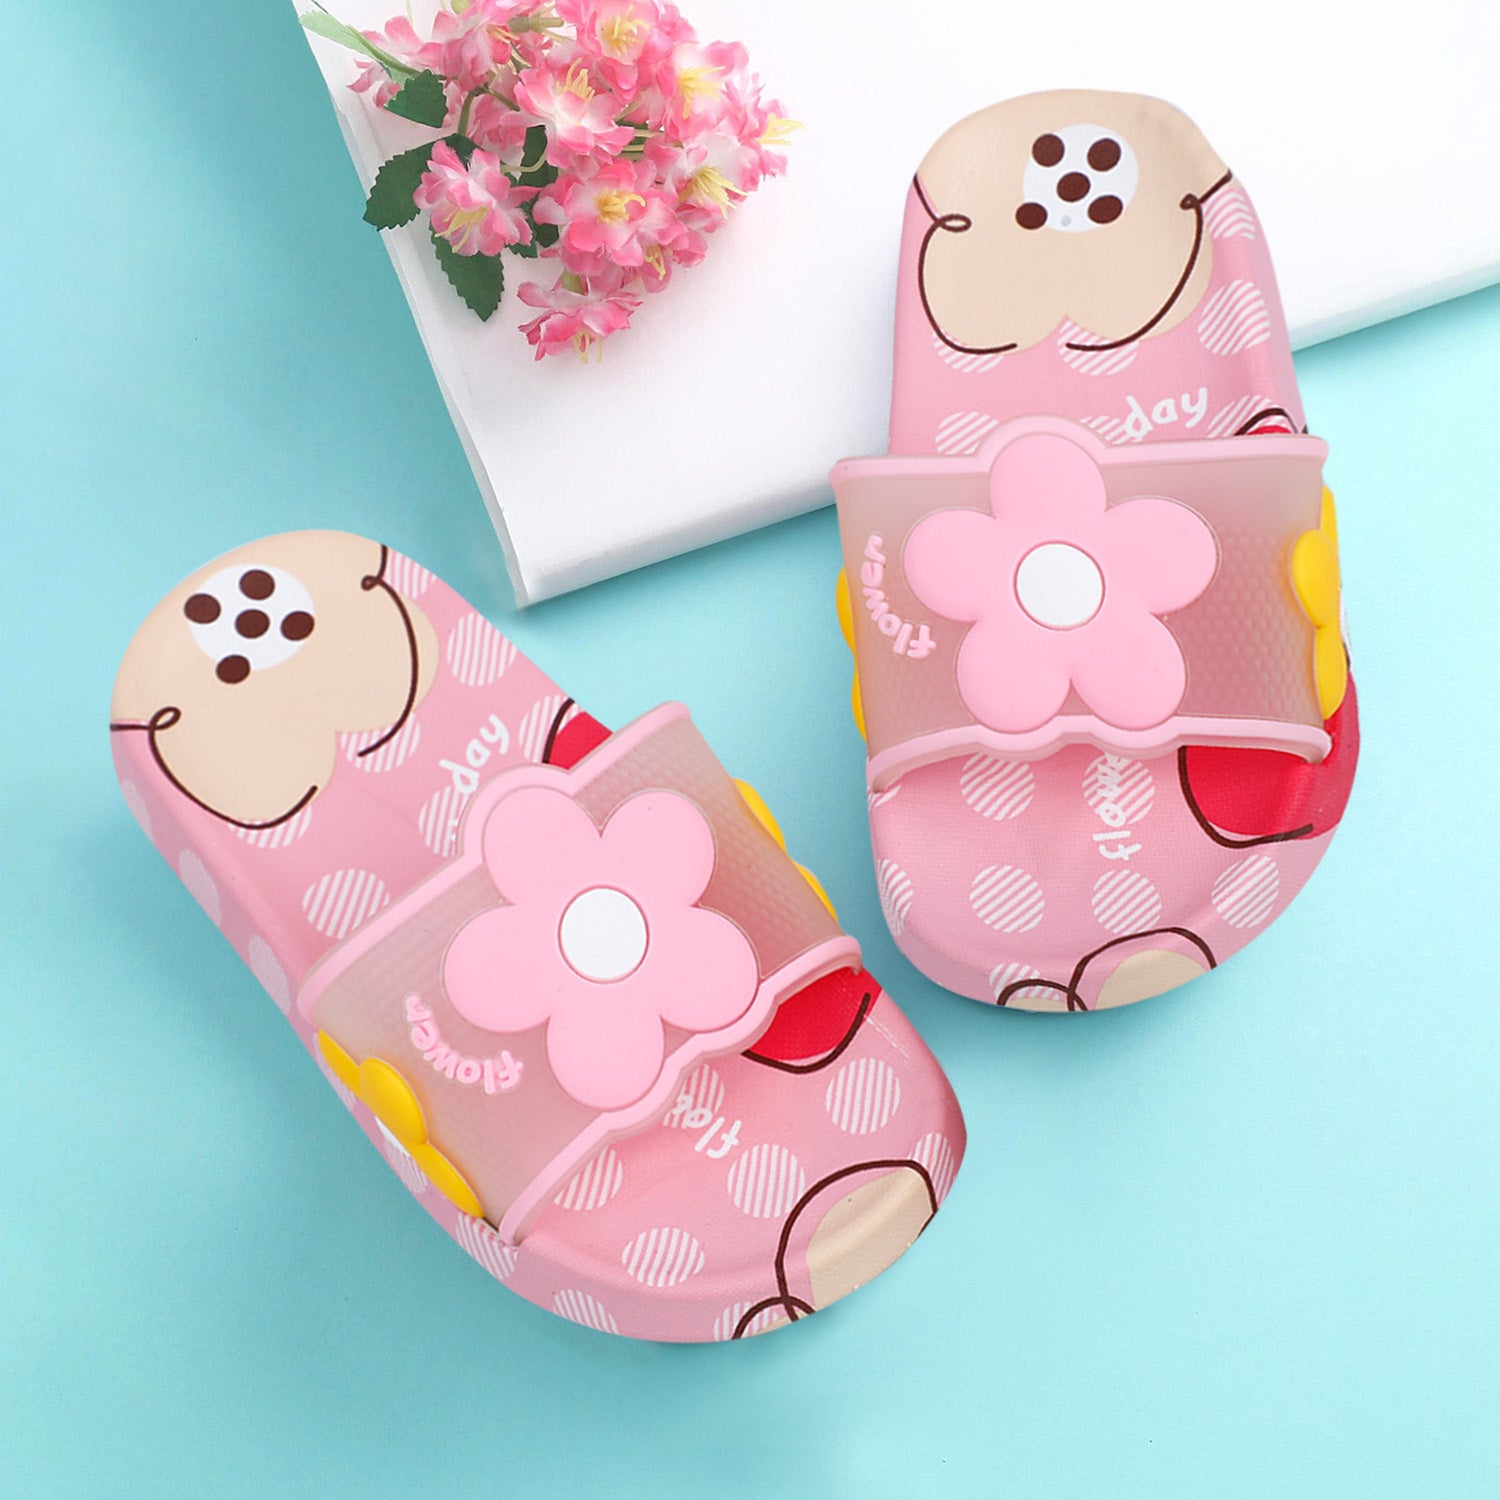 Baby Moo Floral 3D Beach Slippers Sliders - Pink - Baby Moo